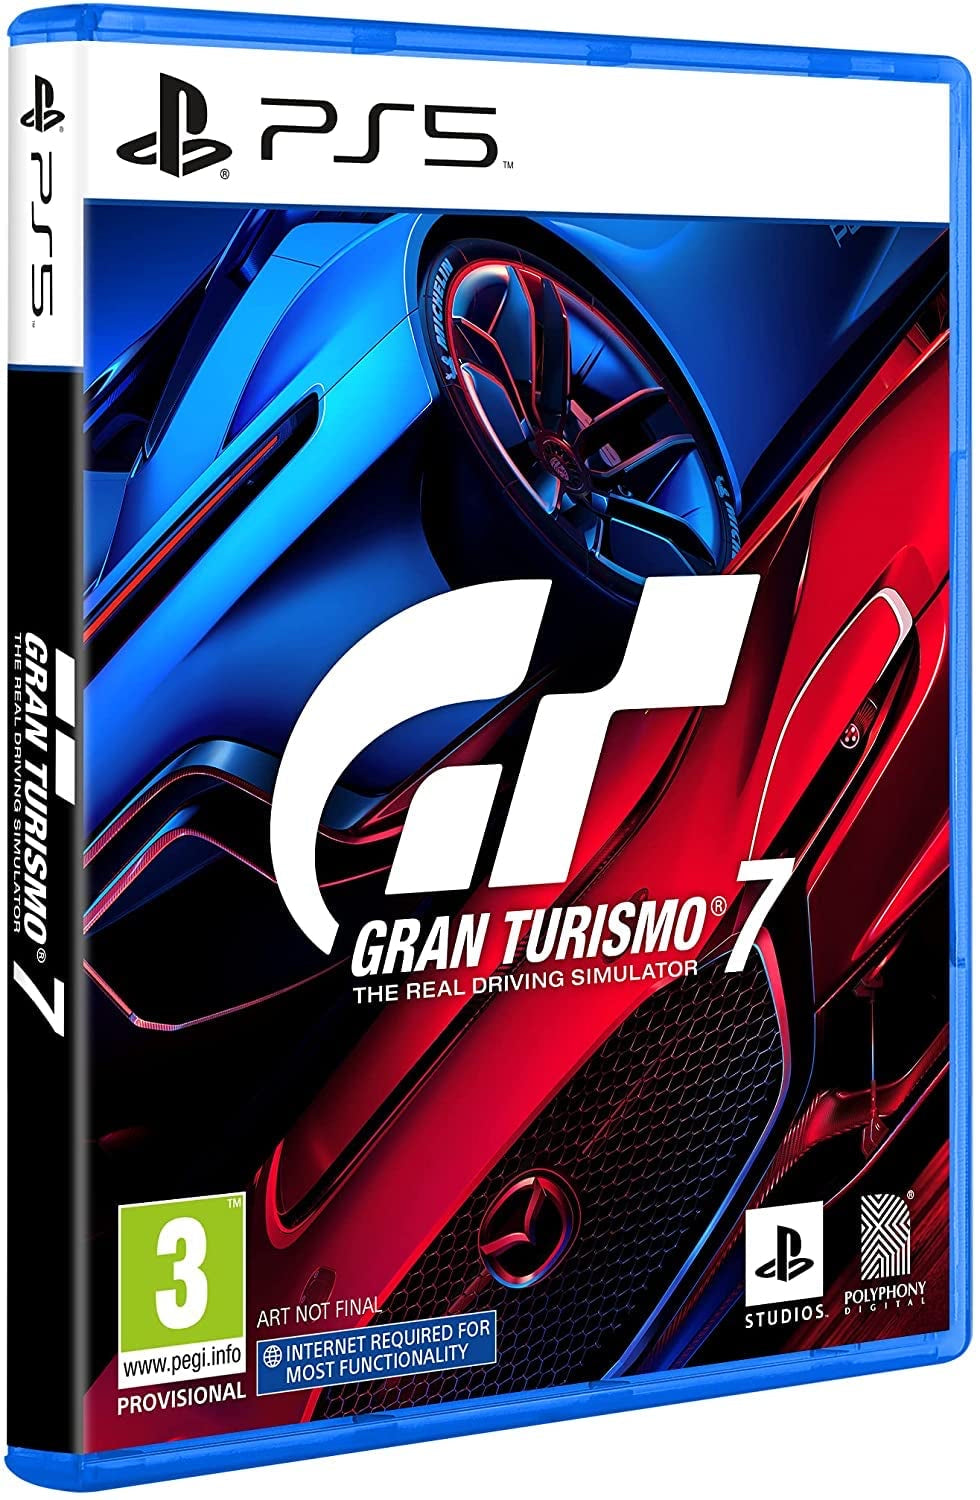 PS5 GRAN TURISMO 7 video game